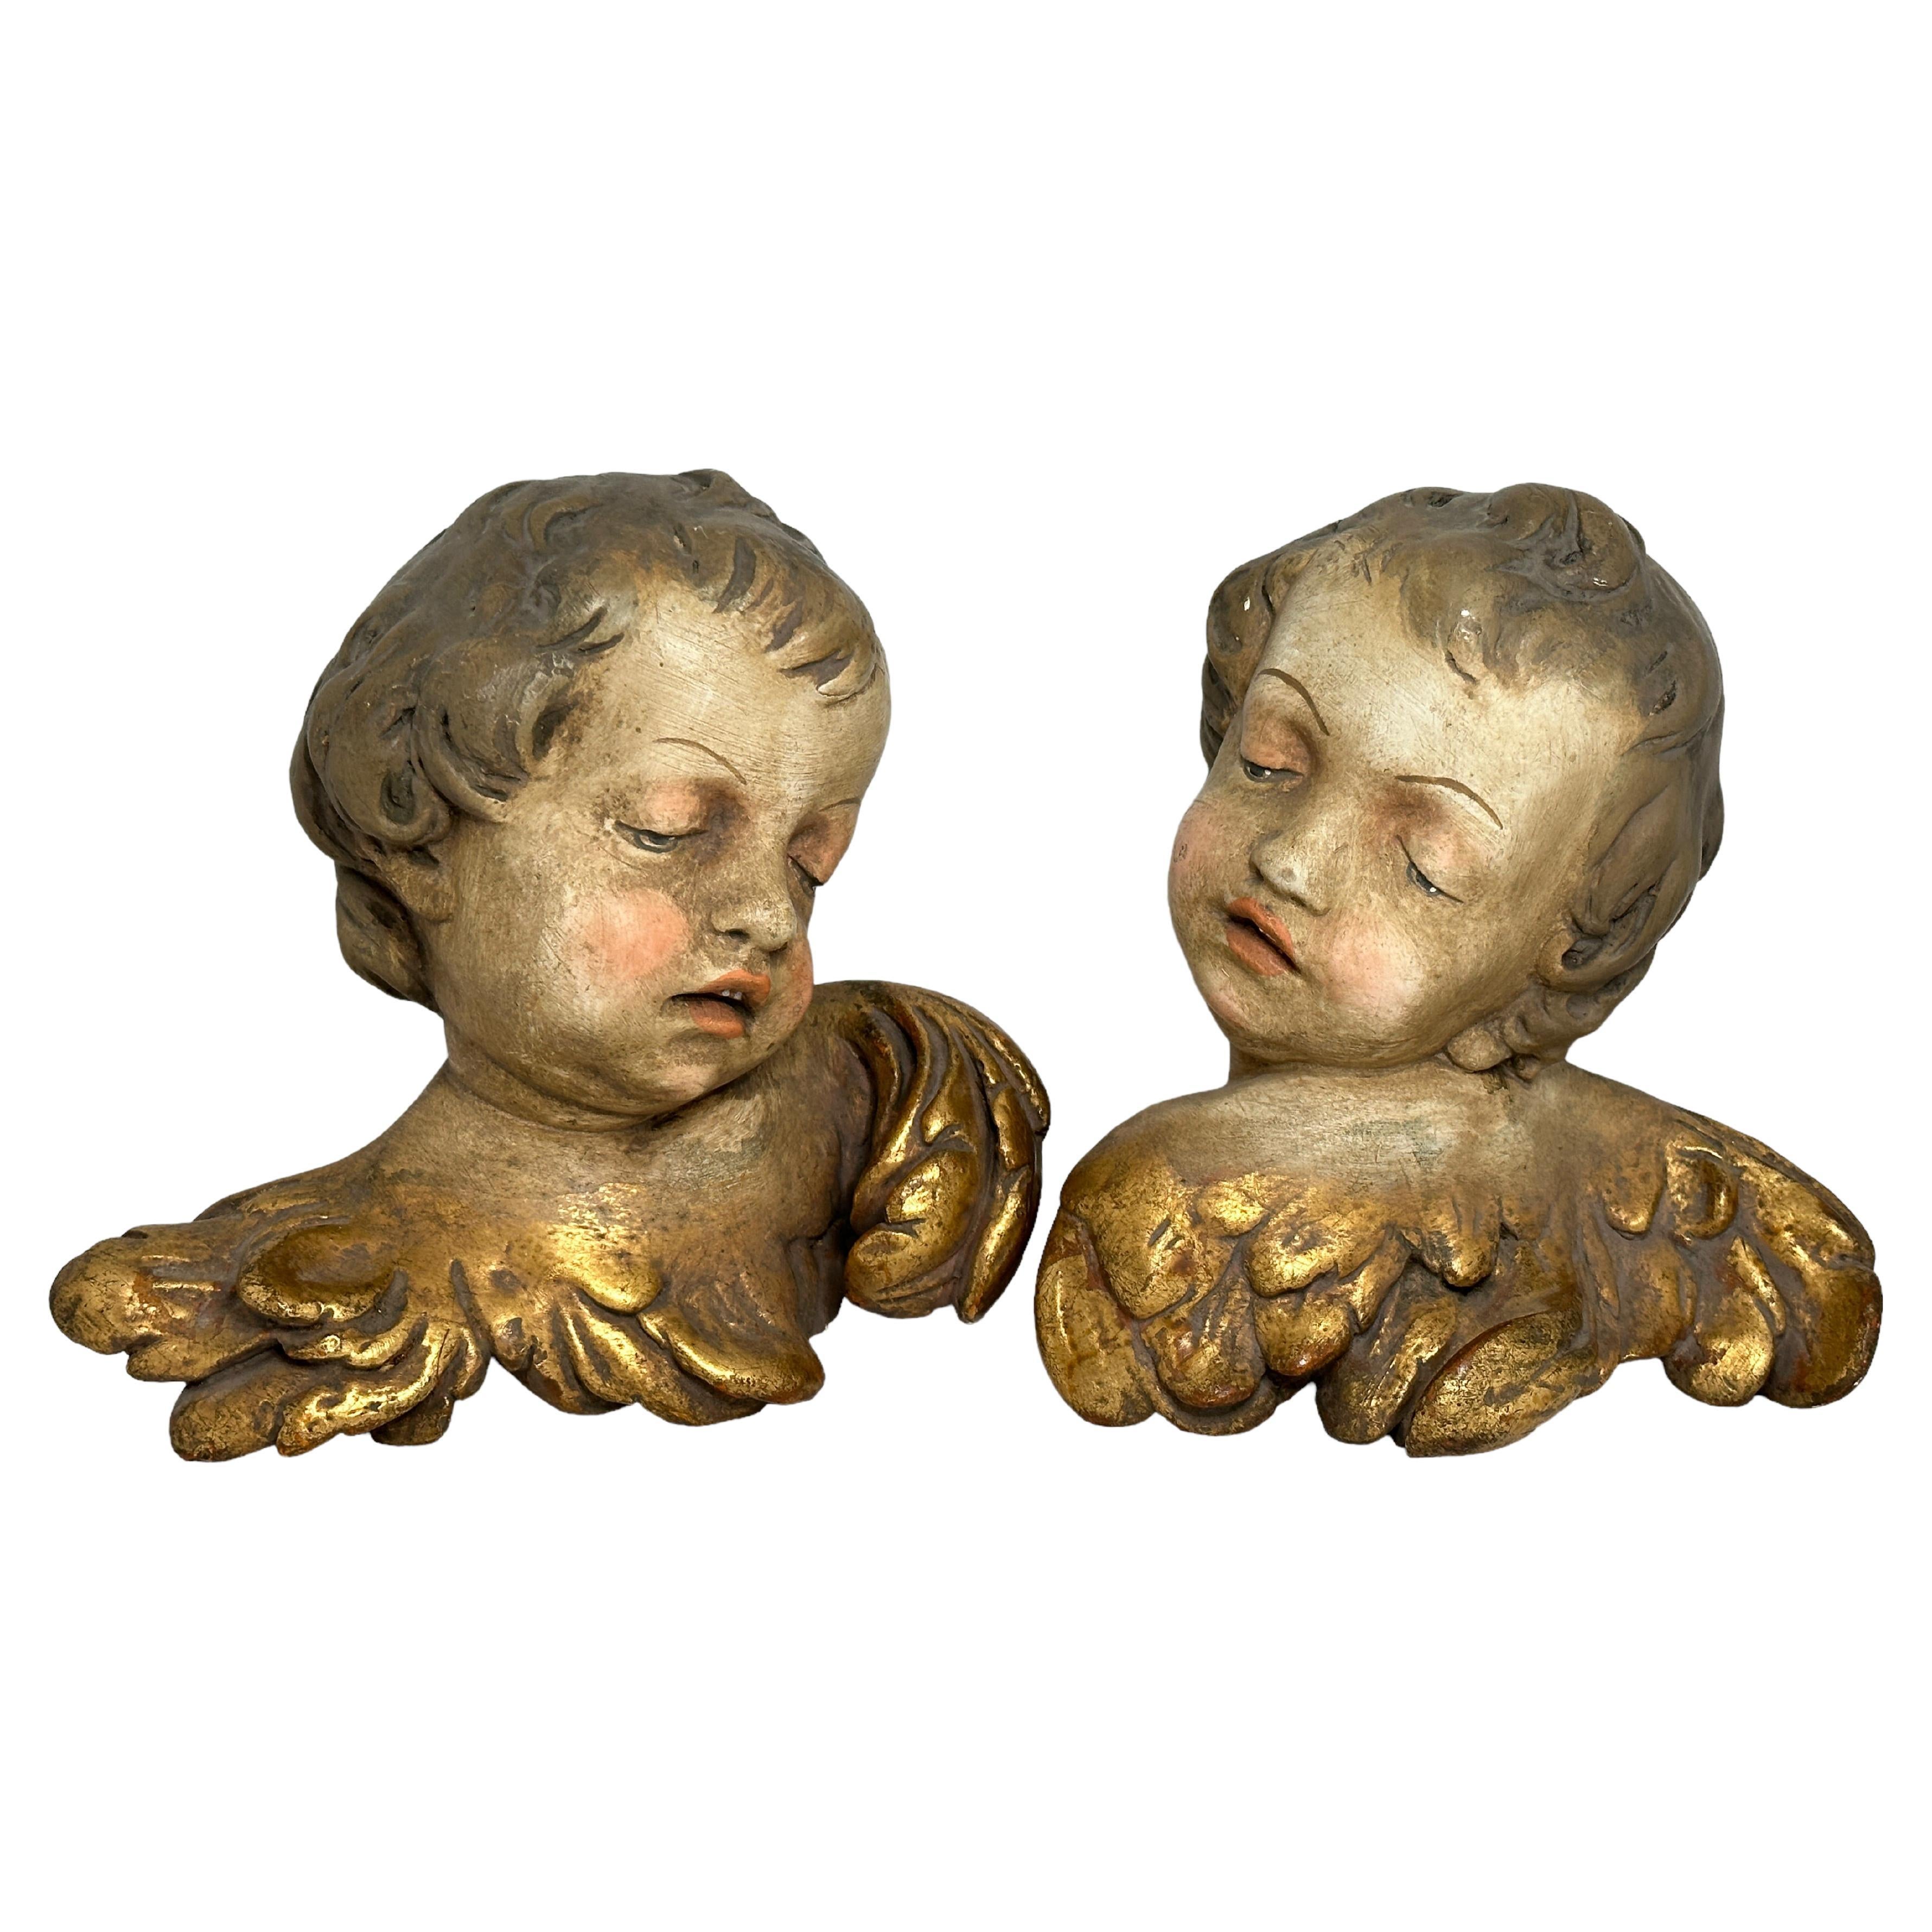 Pair Beautiful Baroque Style Stucco Plaster Cherub Angel Heads, Antique Italy